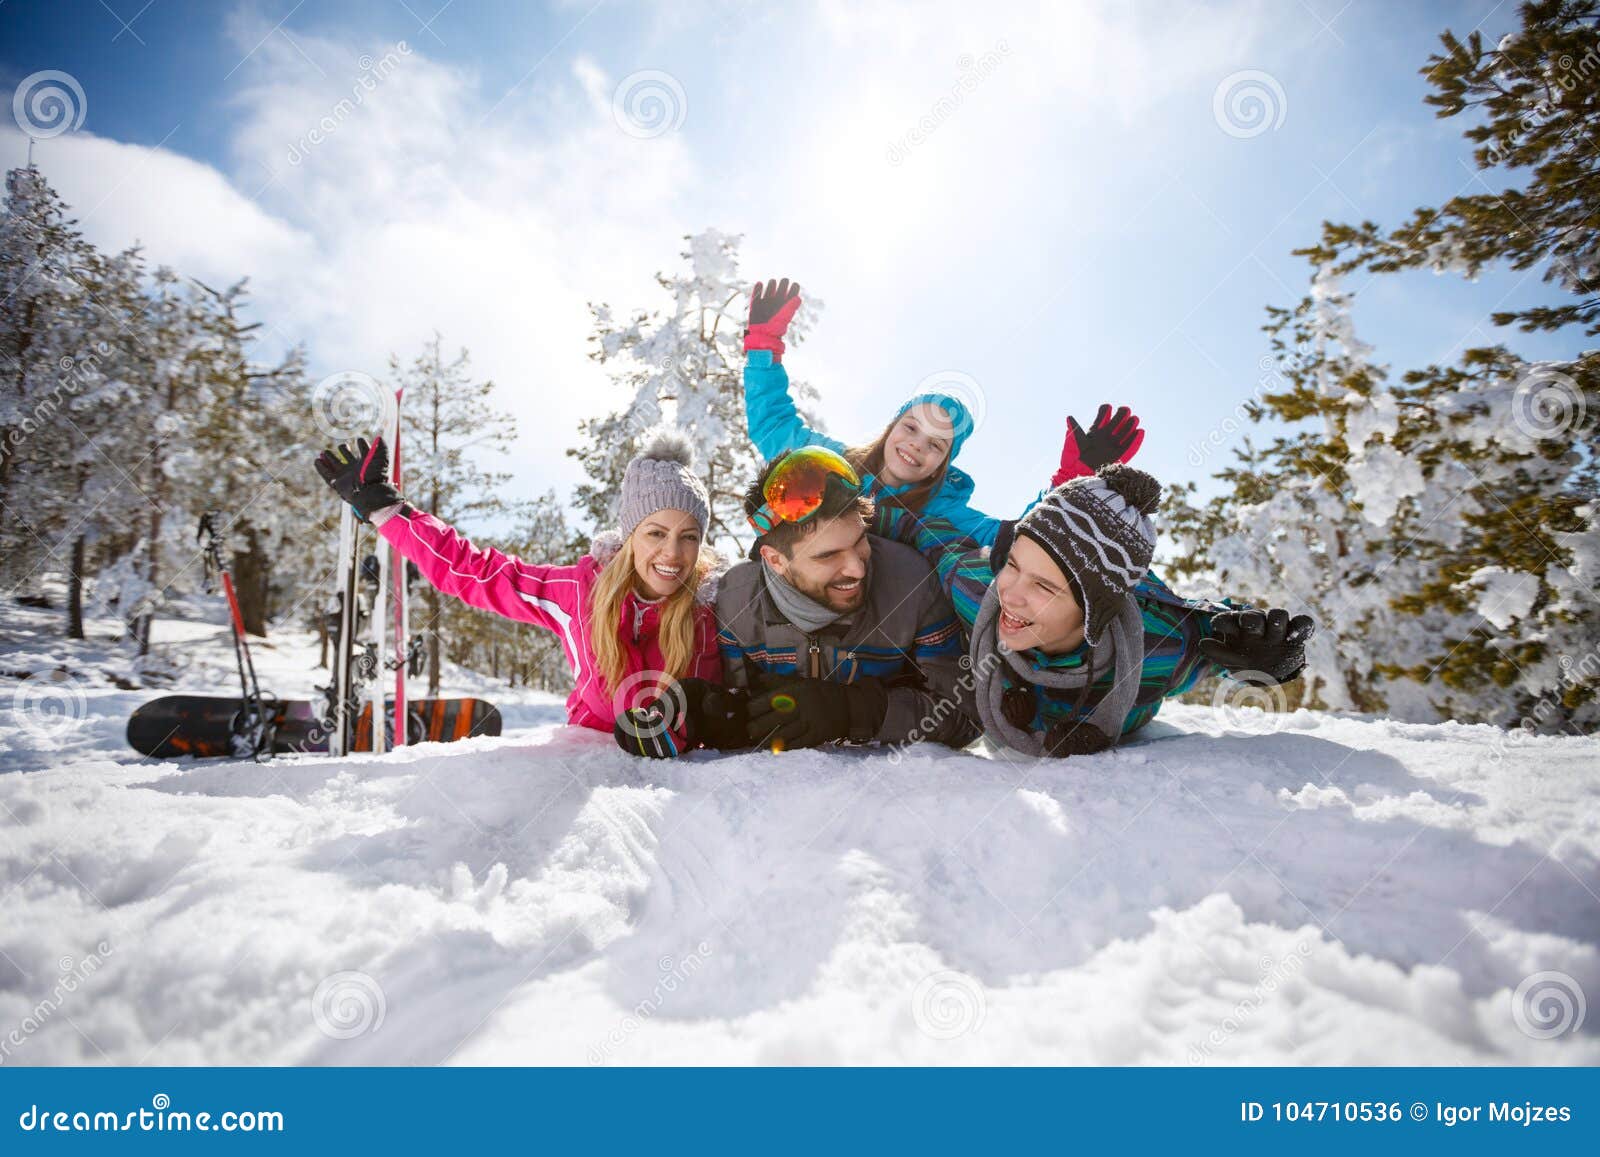 family-children-having-fun-snow-mountain-104710536.jpg